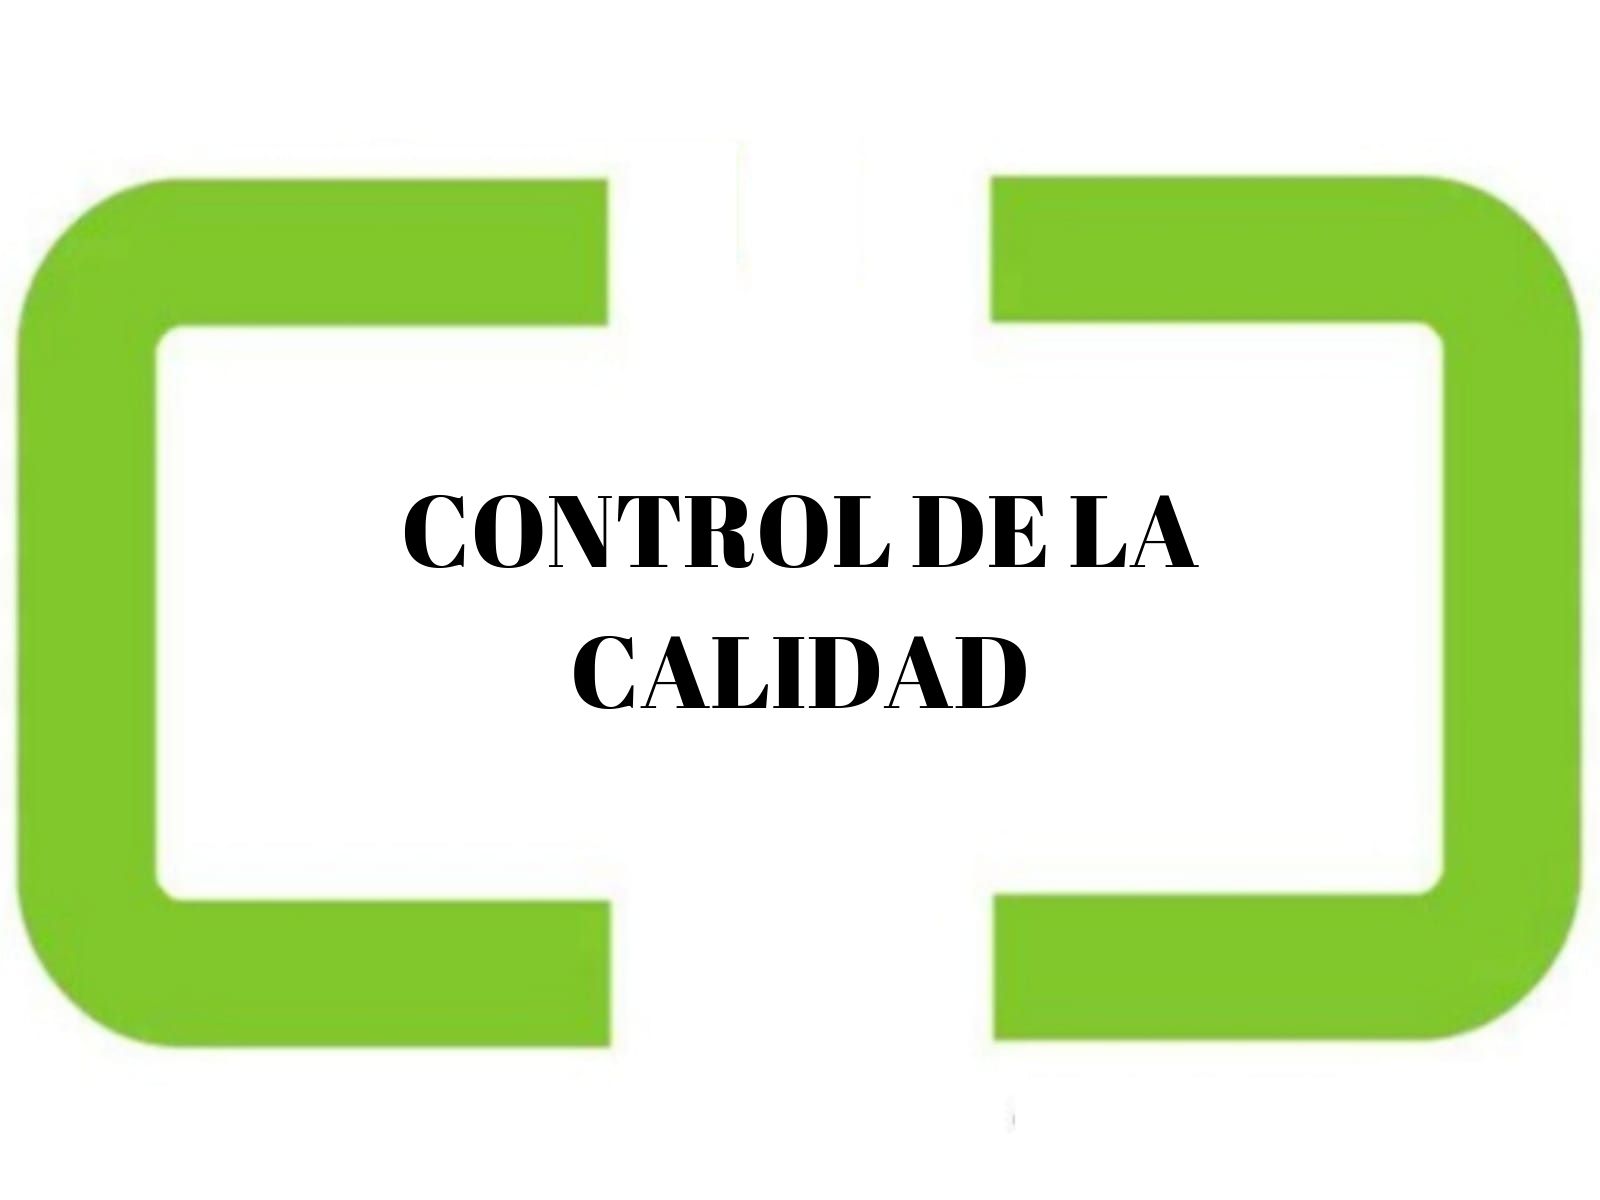 CONTROL DE LA CALIDAD